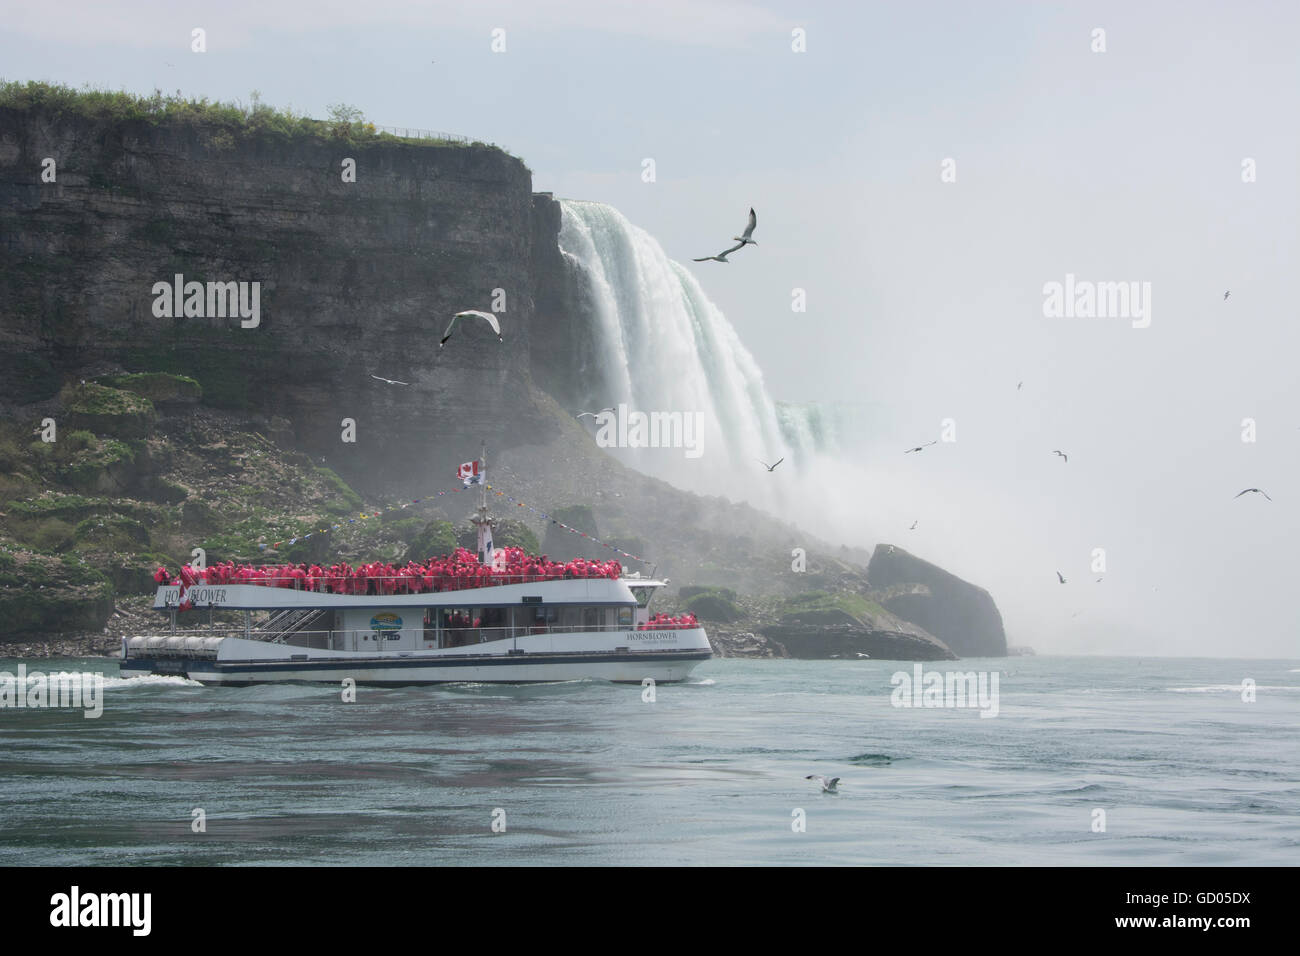 Canada, Ontario, Niagara Falls. Hornblower tourist boat exploring Niagara Falls. Stock Photo